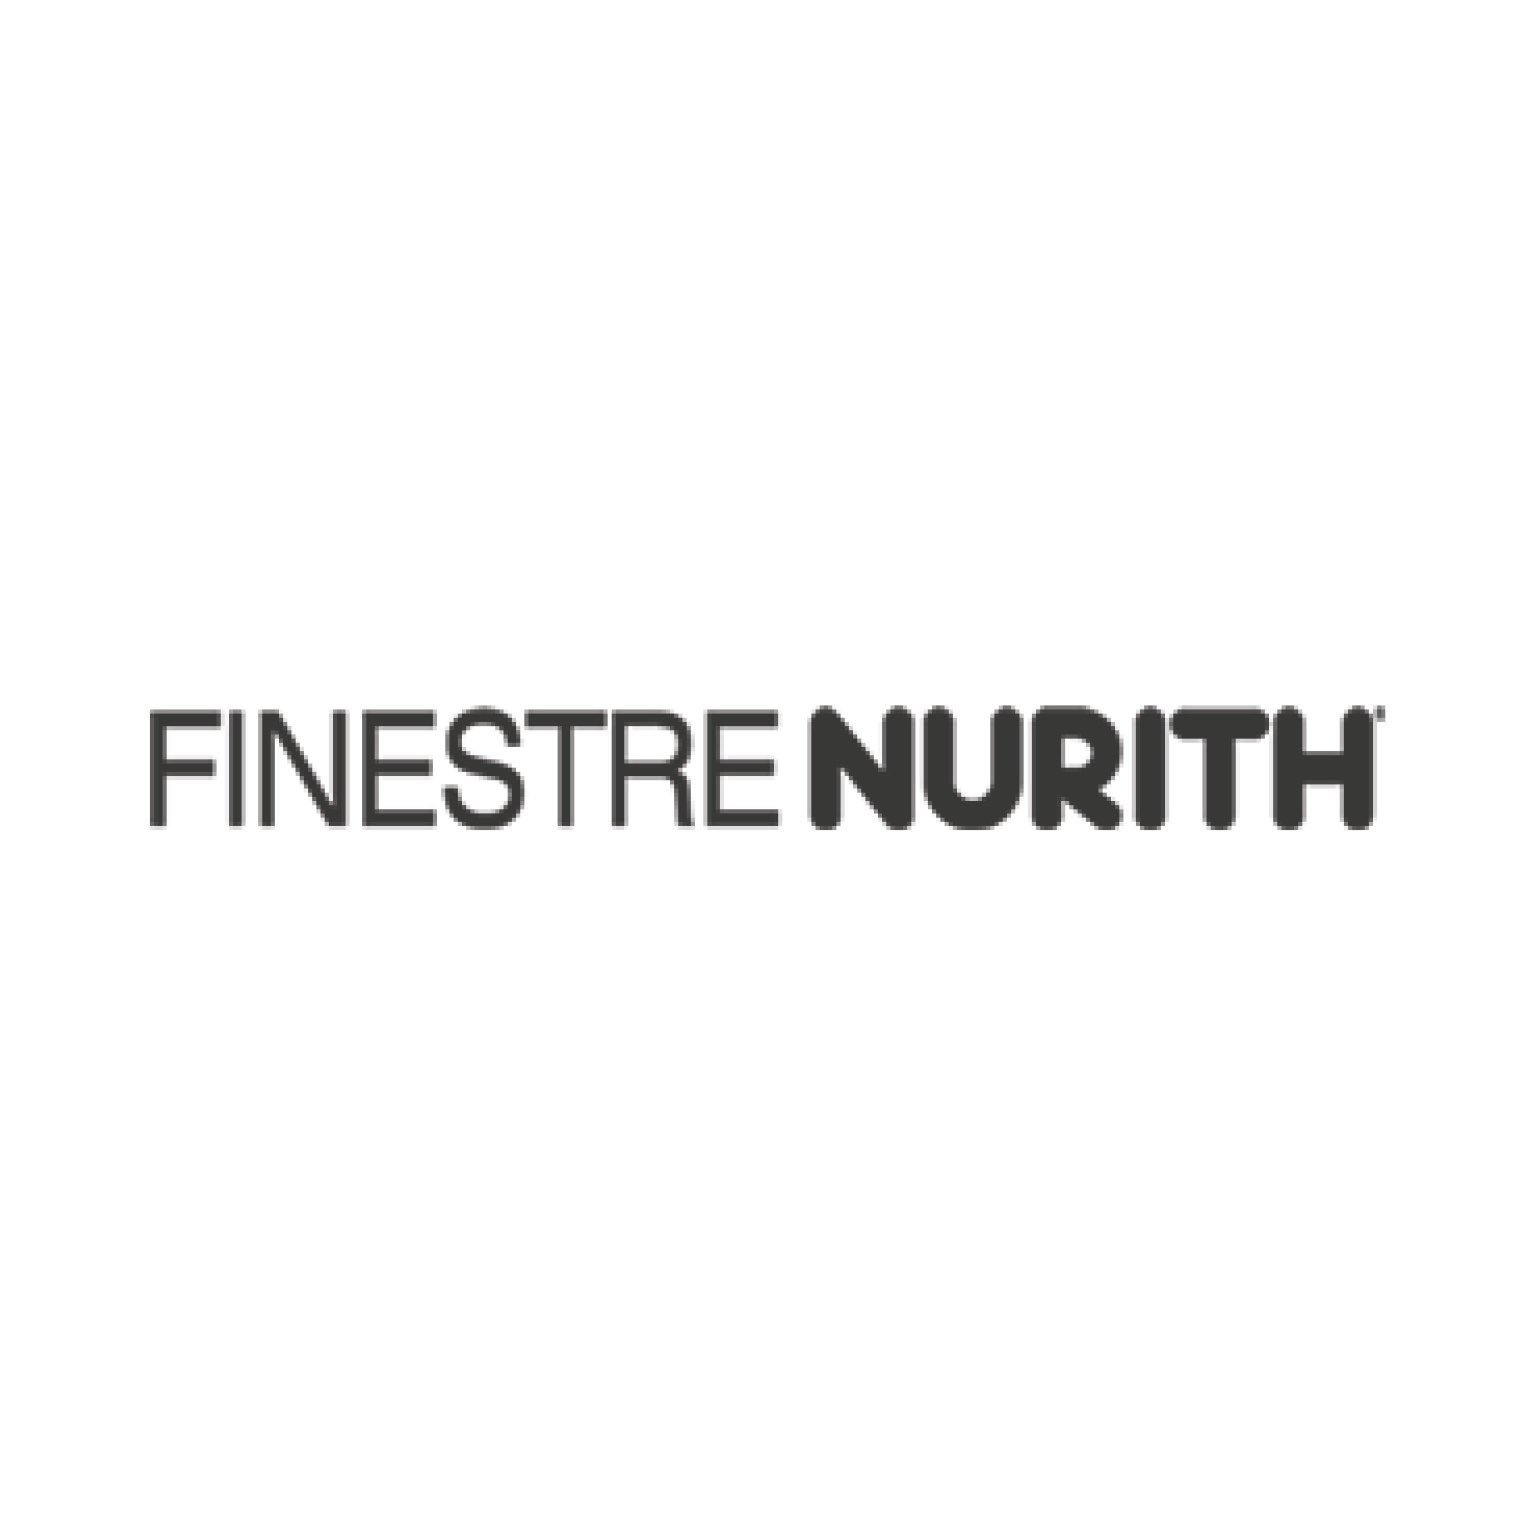 Finestre Nurith